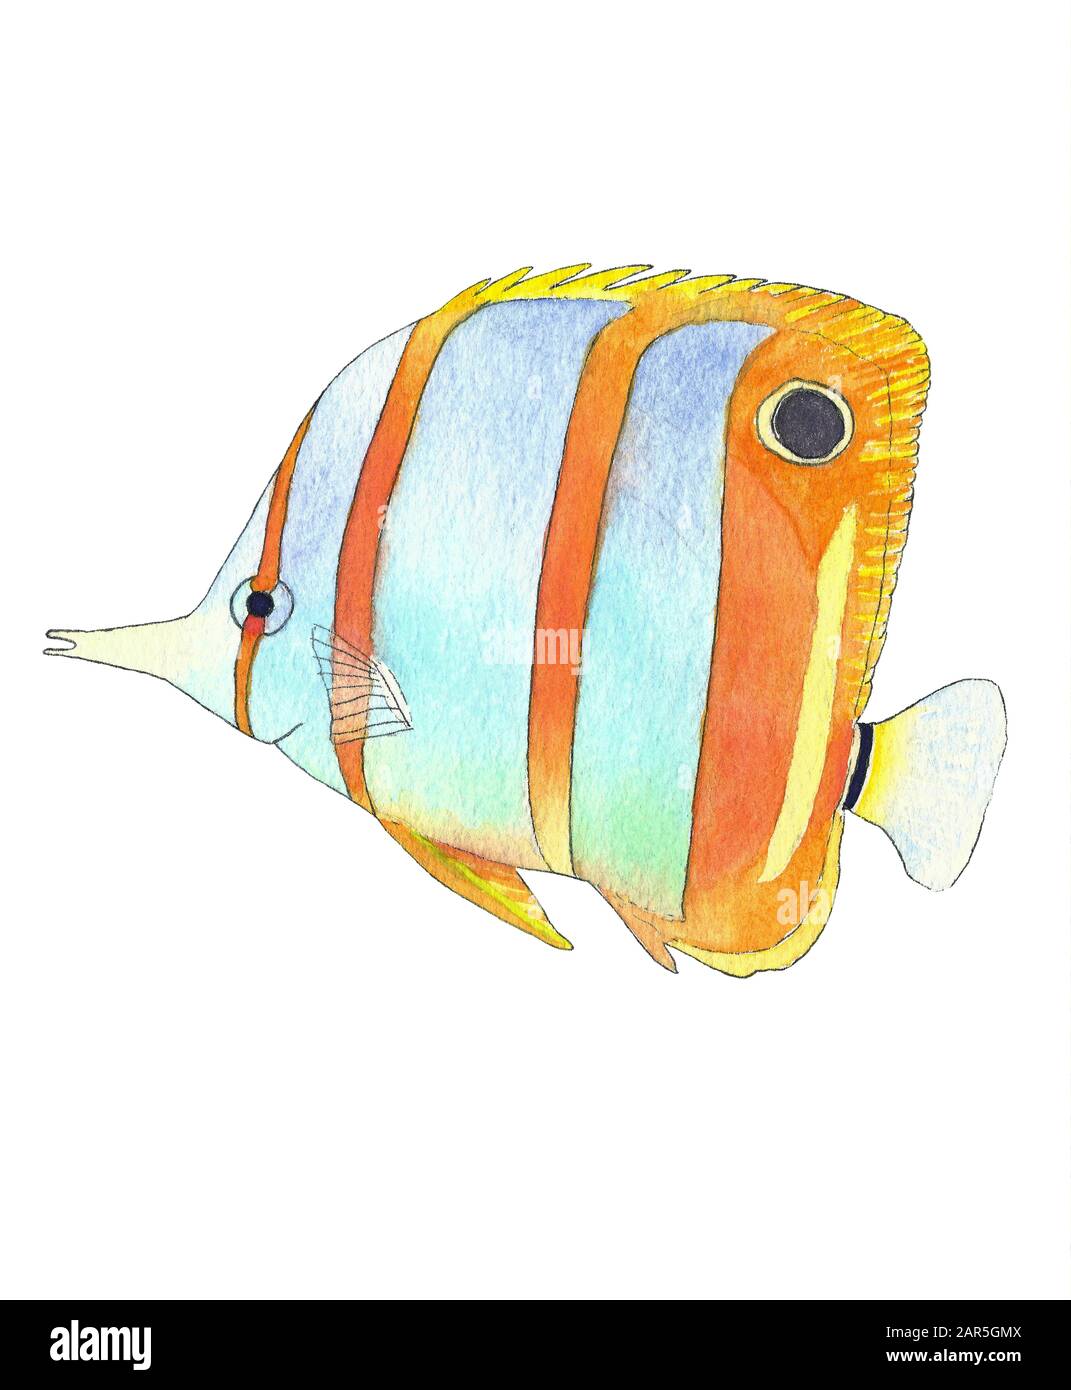 297 Fish Drawing Realistic Stock Photos - Free & Royalty-Free